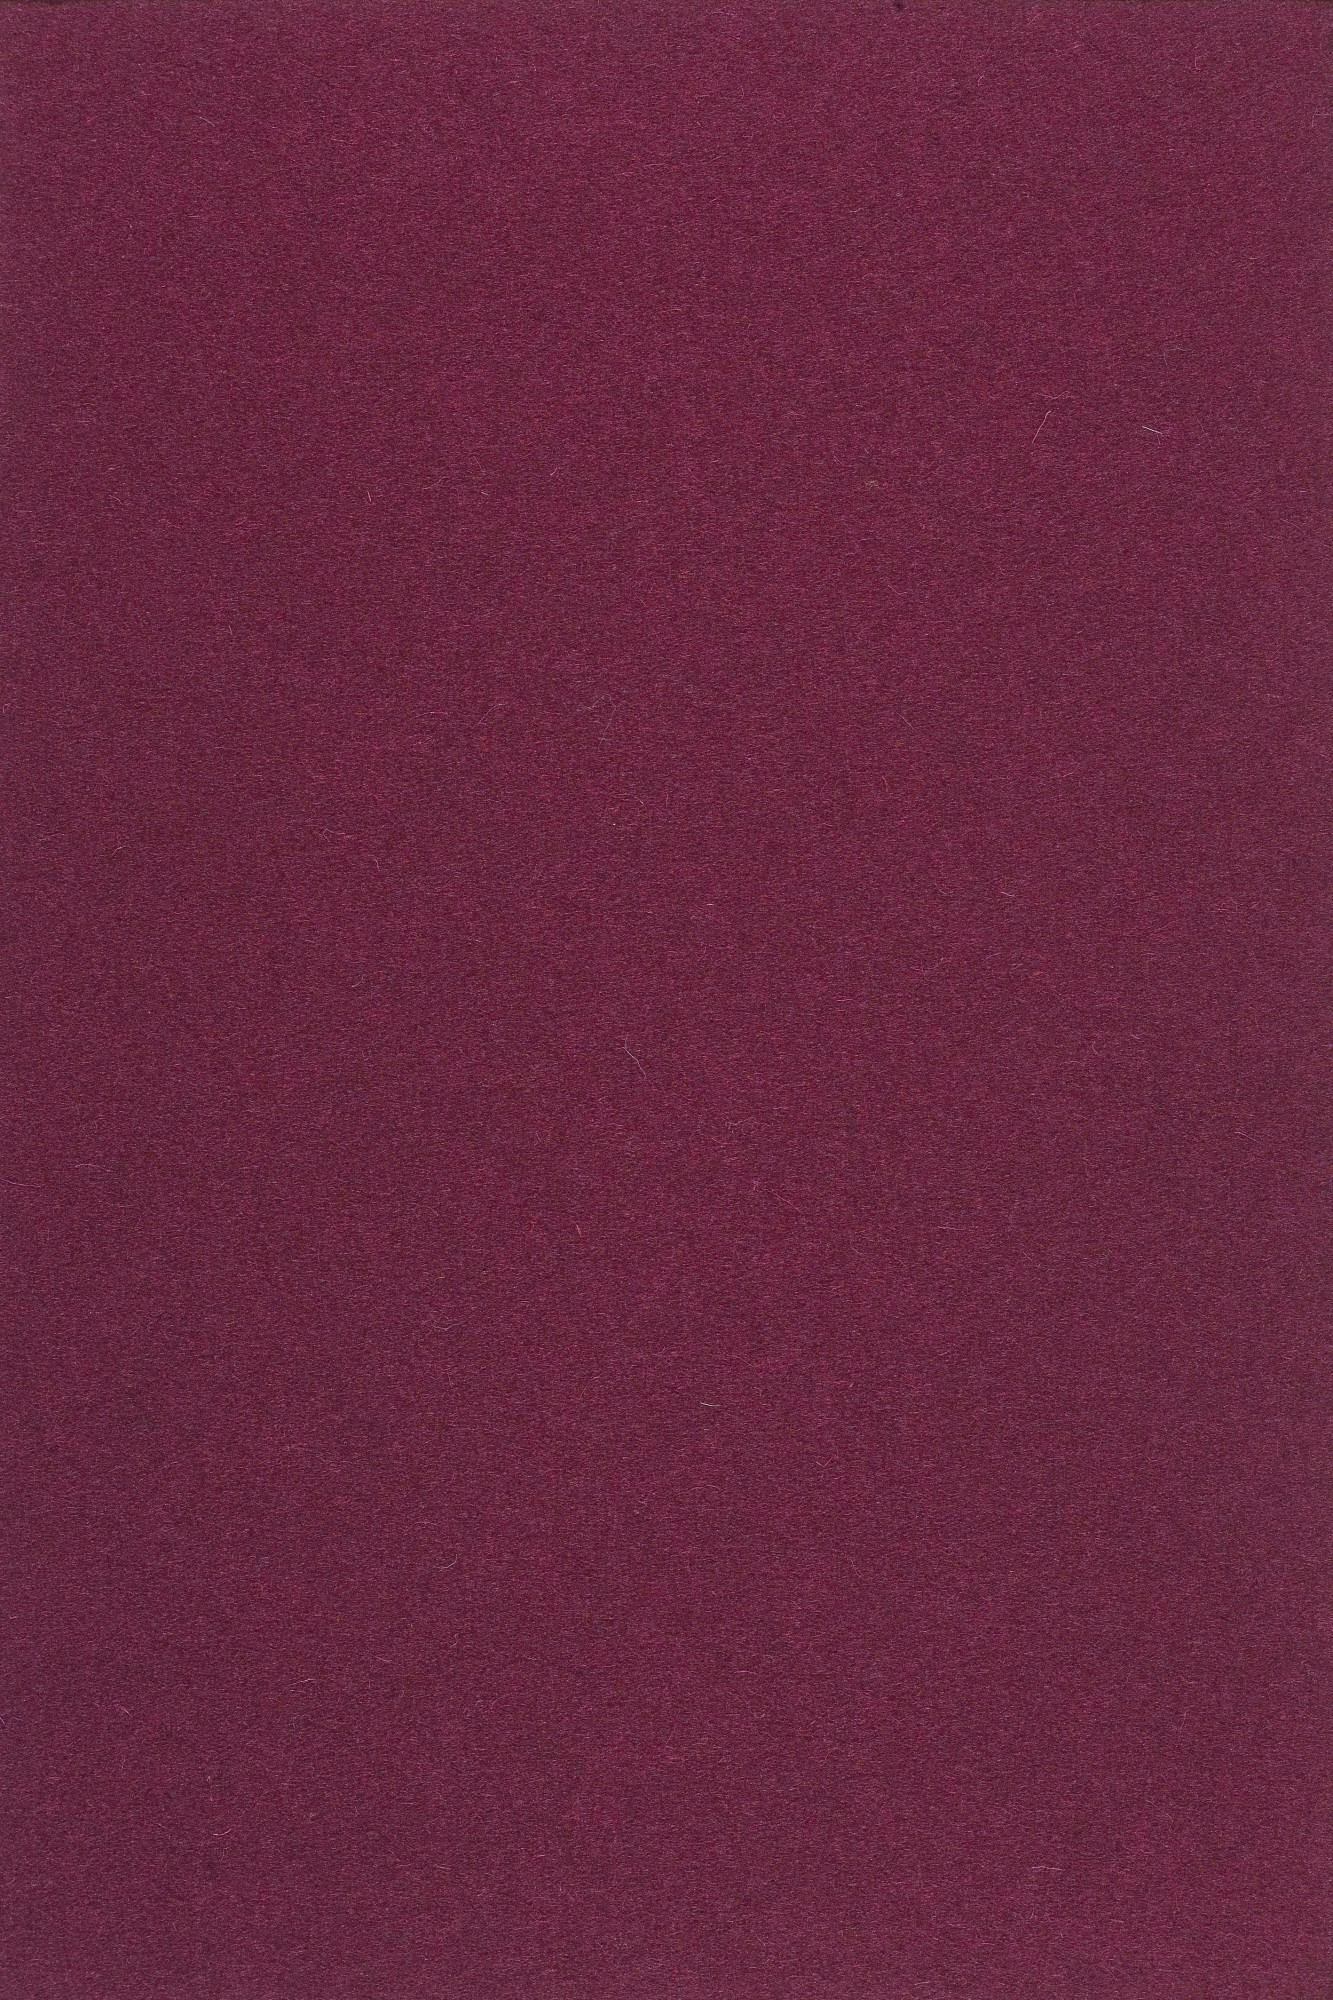 Fabric sample Divina 3 671 purple